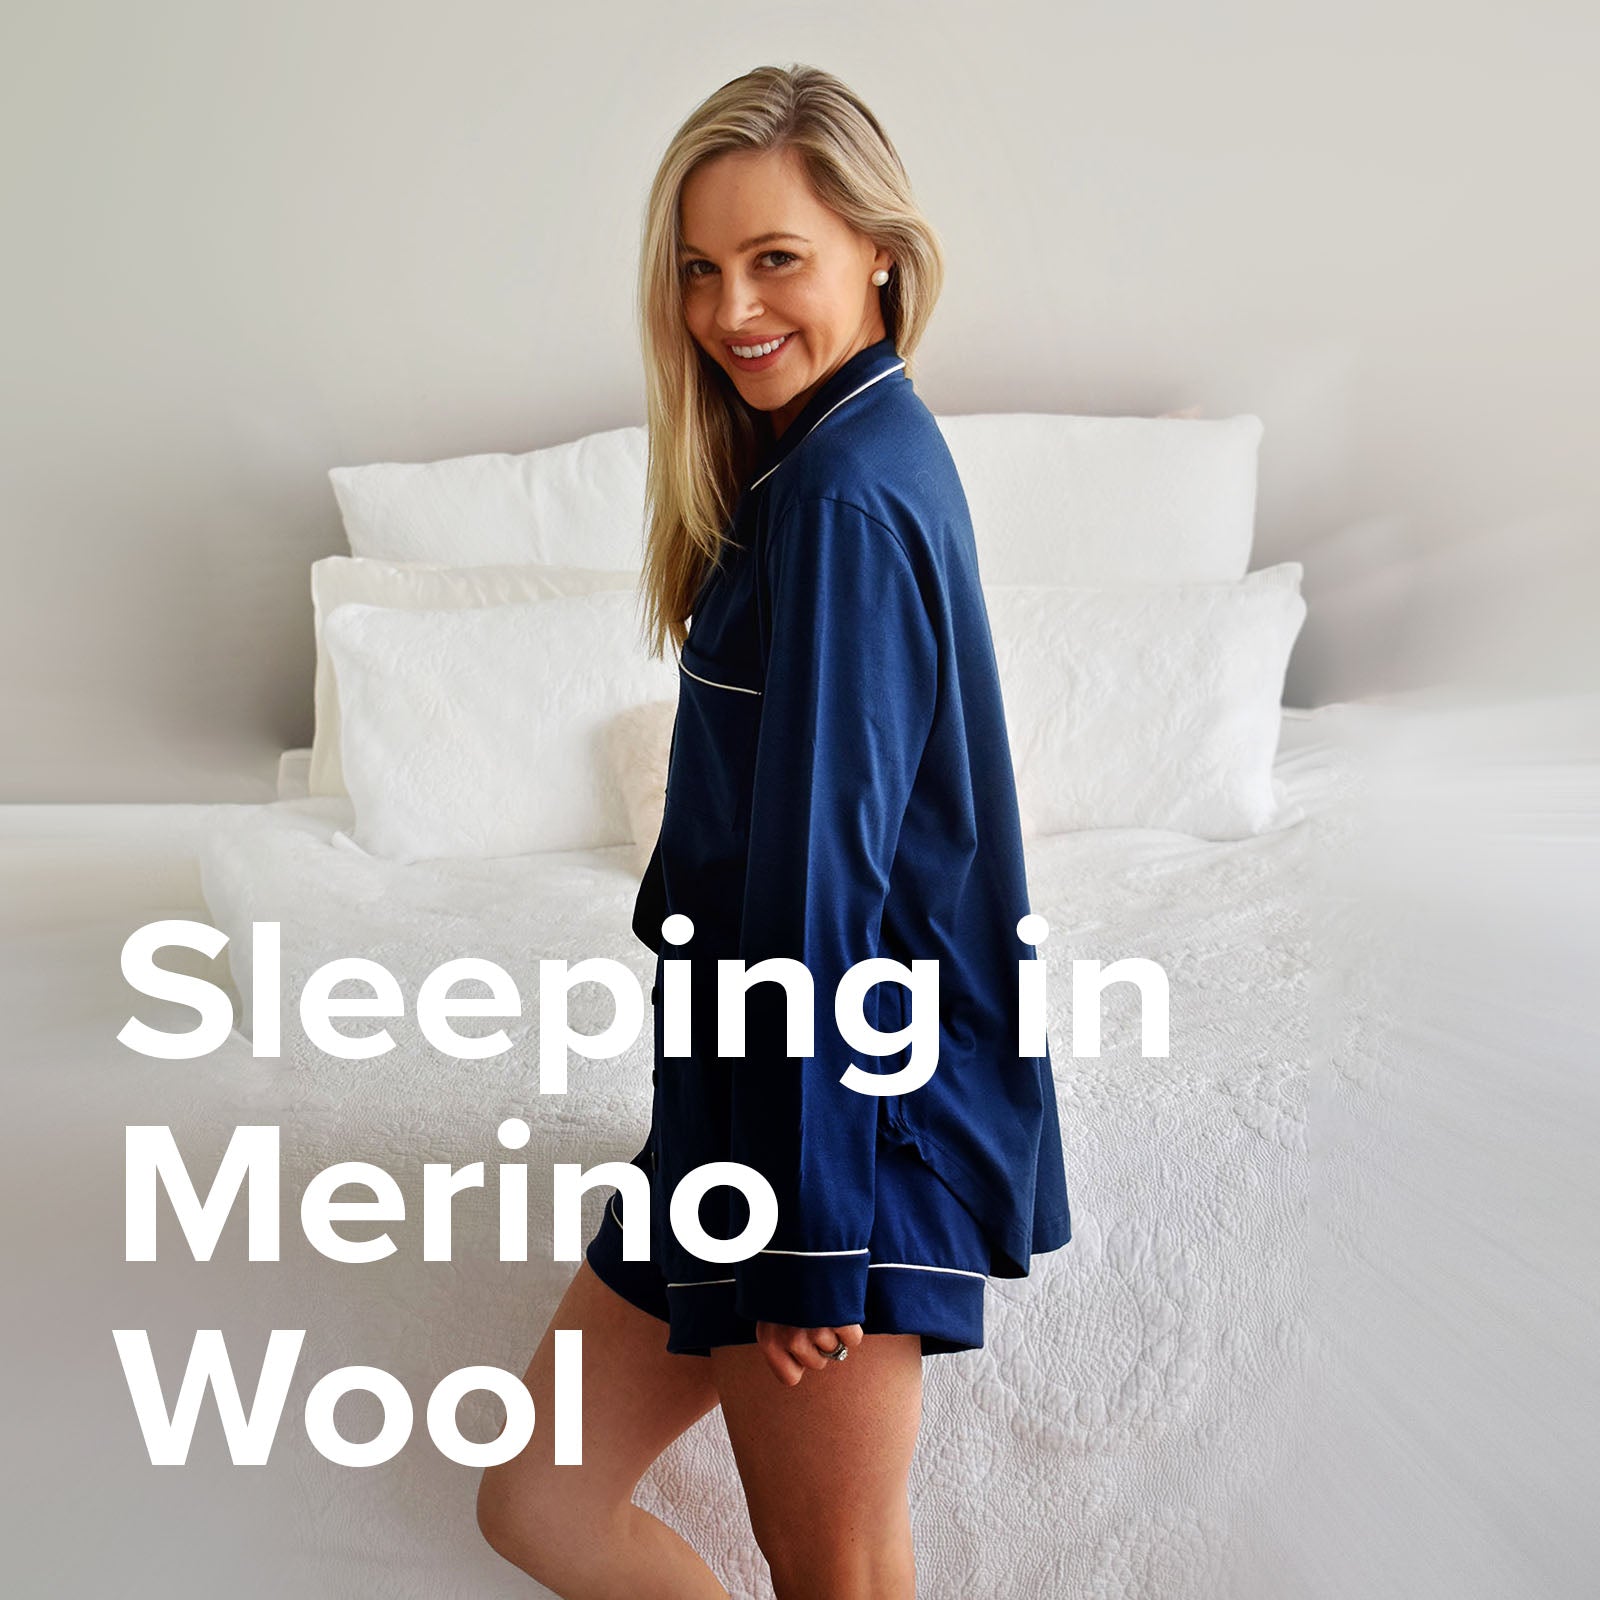 Our model wearing merino pyjamas